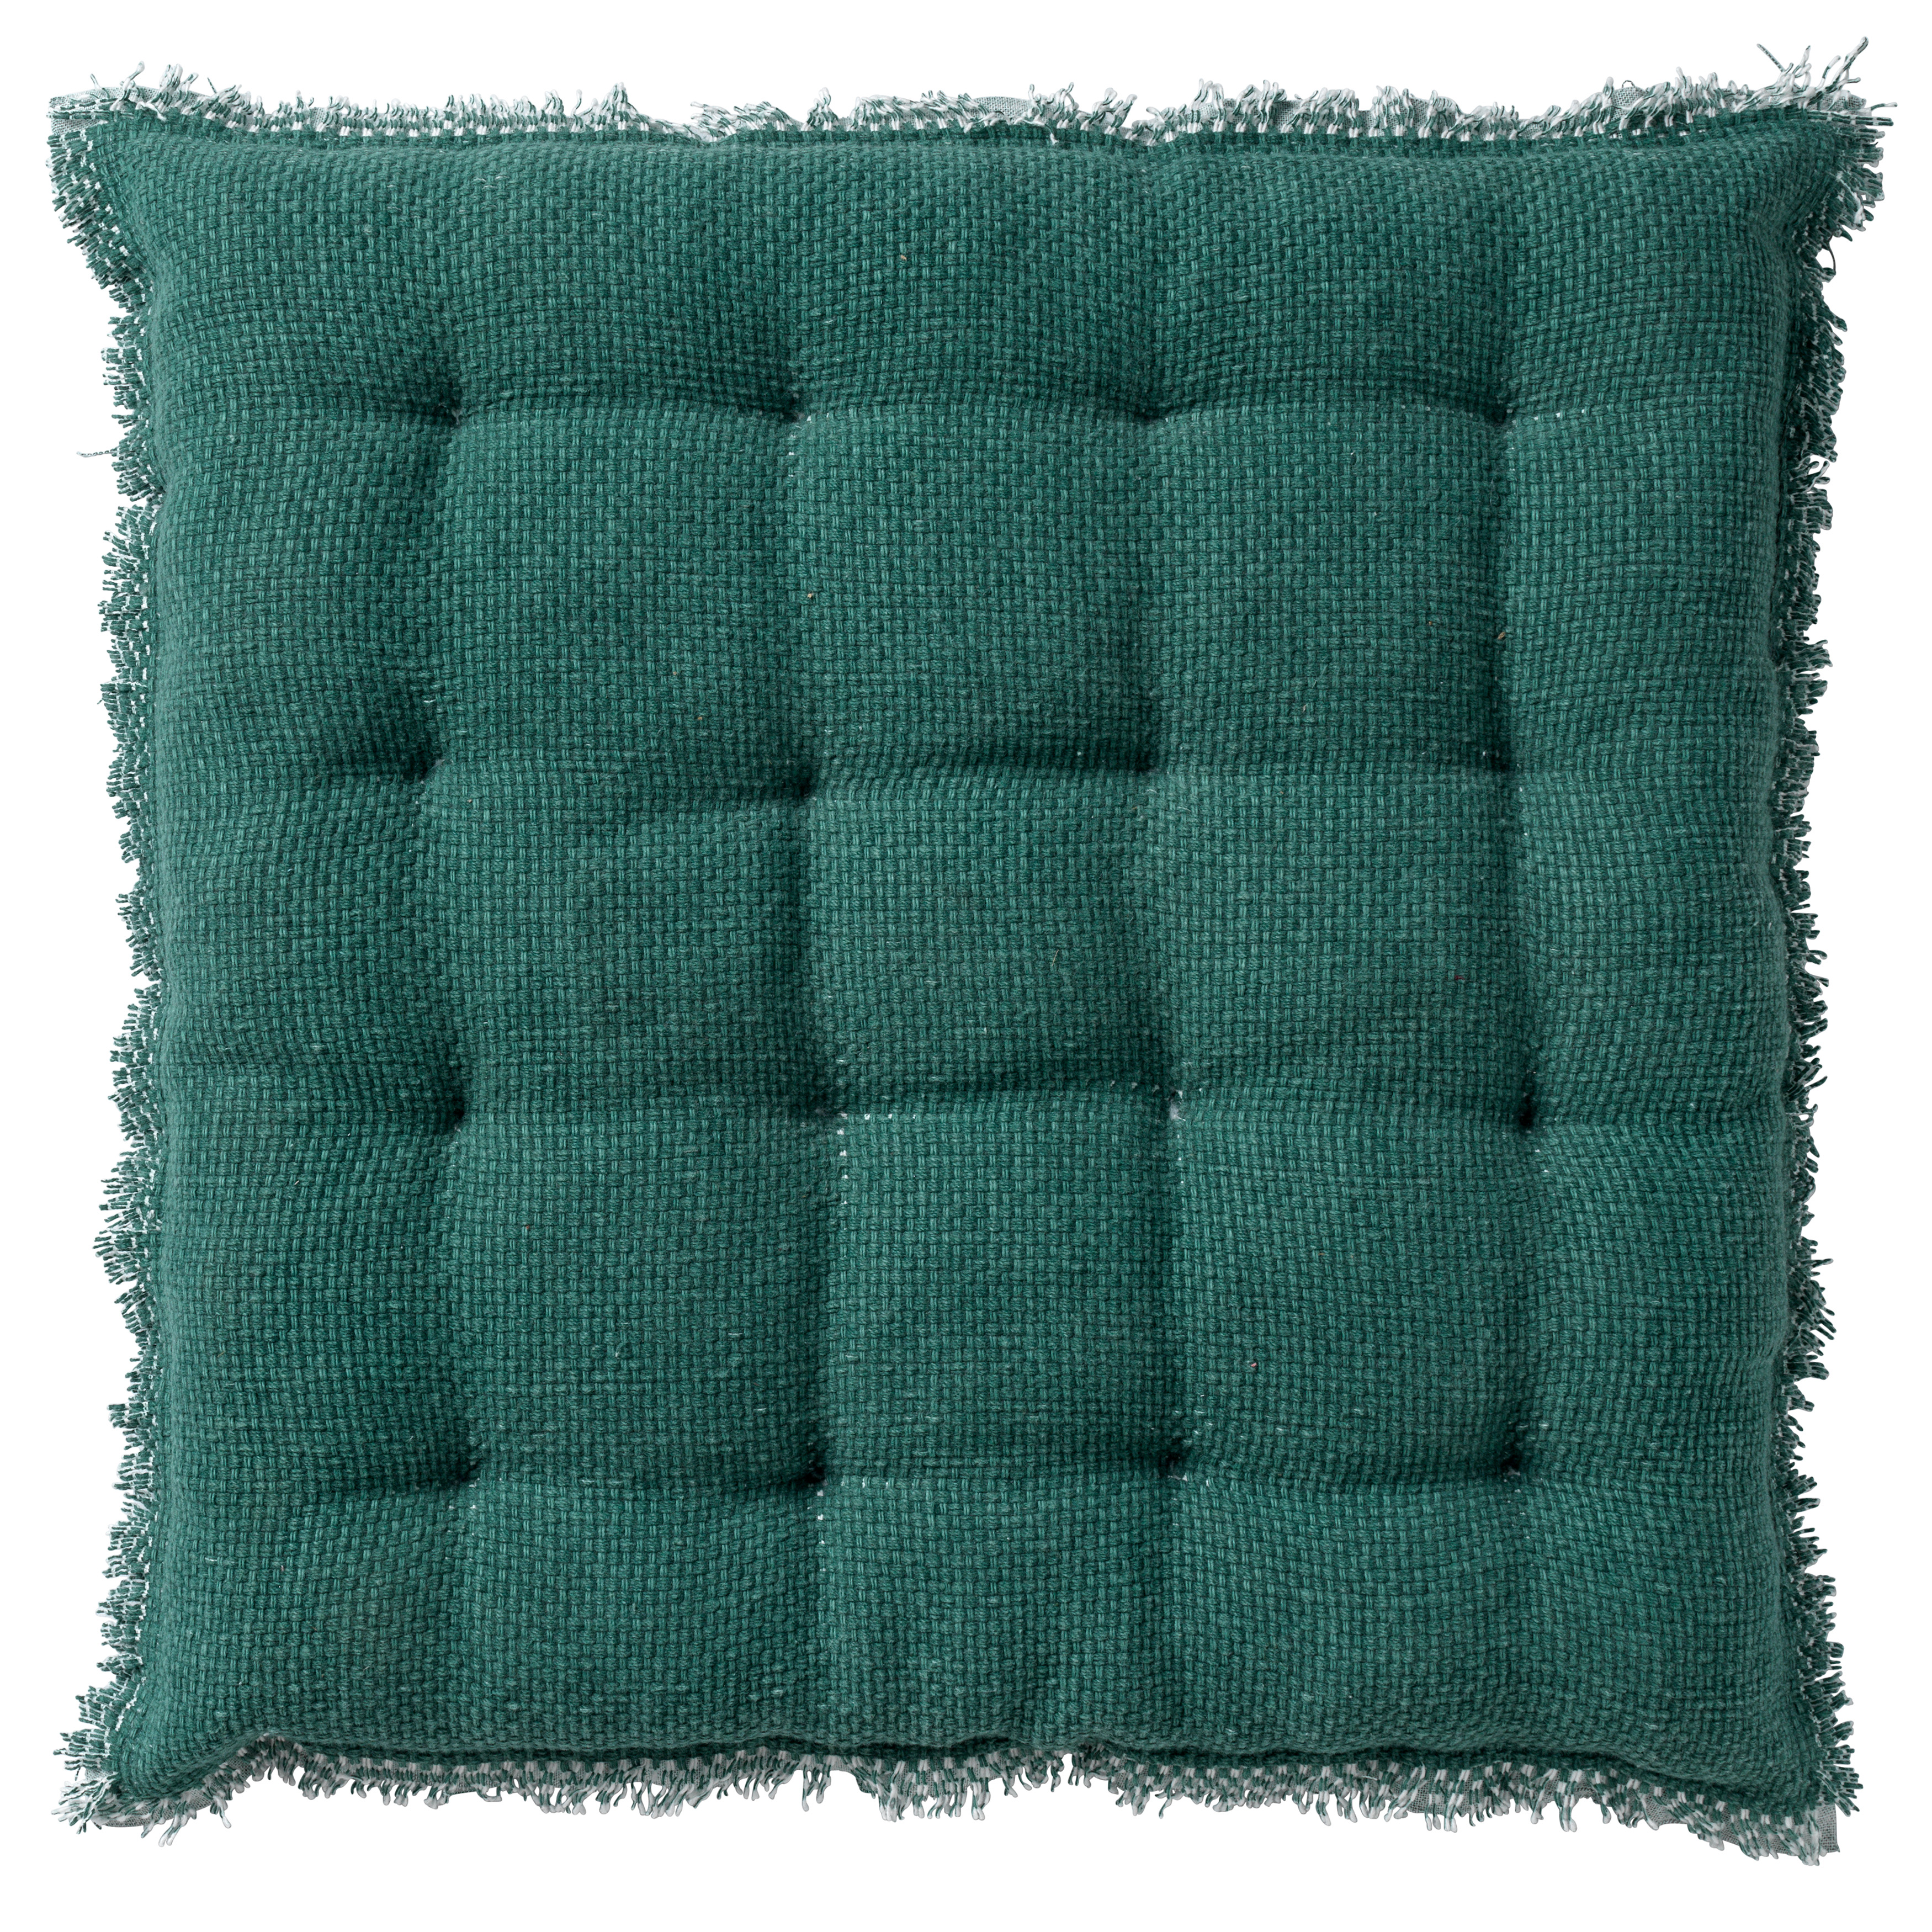 BURTO - Seat pad cushion washed coton Sagebrush Green 40x40 cm